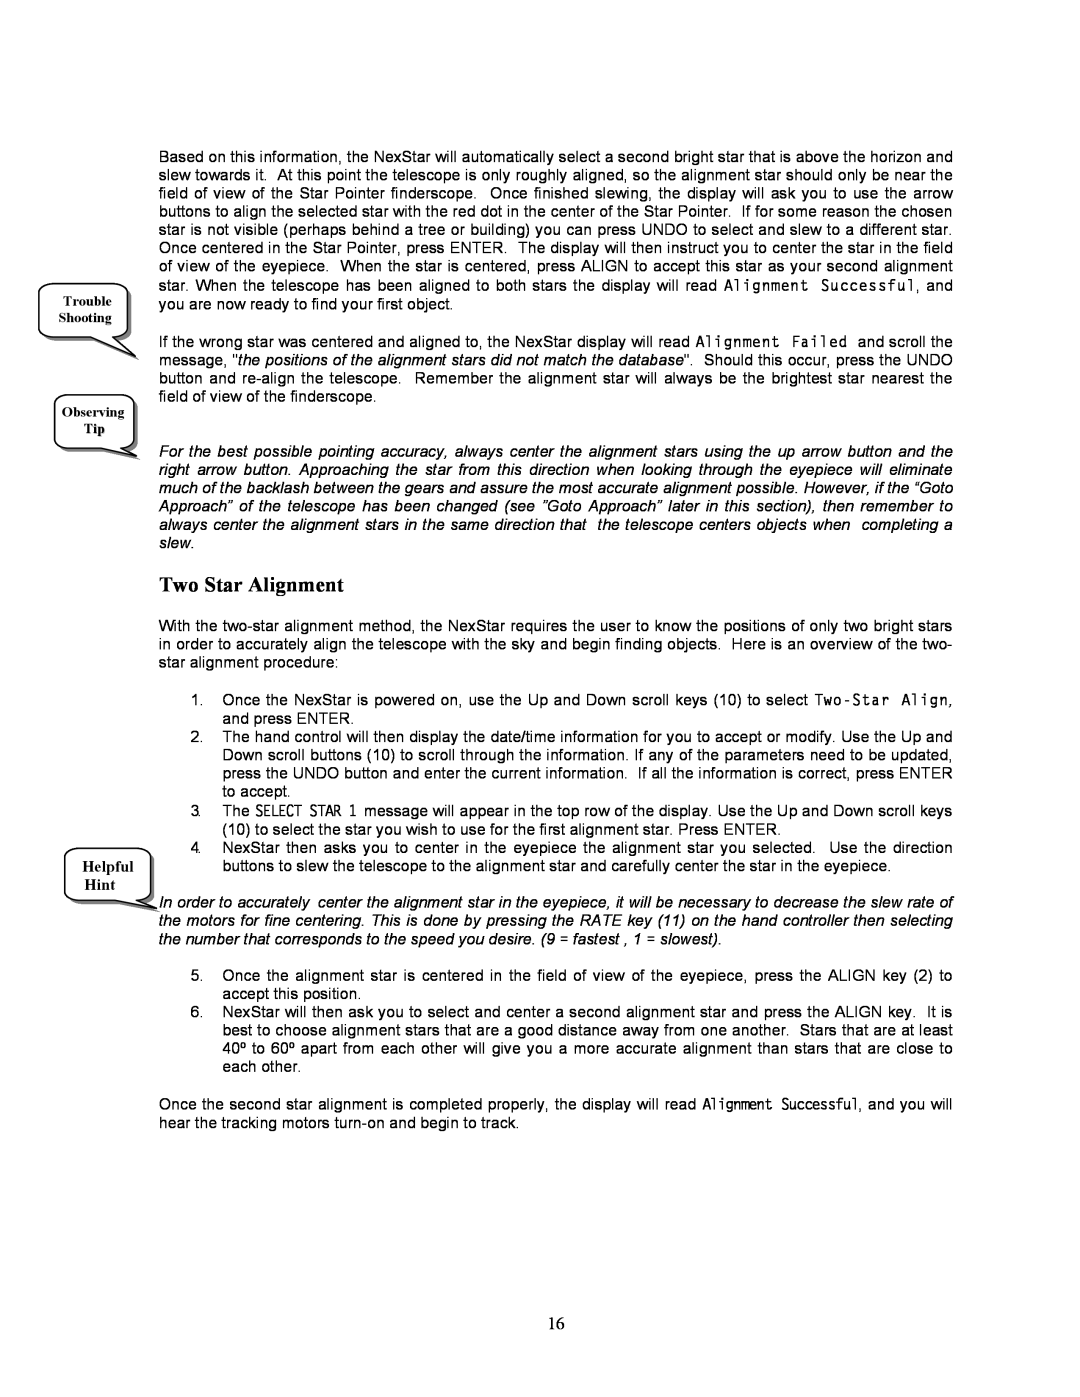 Celestron NexStar 8i manual Two Star Alignment, Helpful, Hint, Observing Tip 